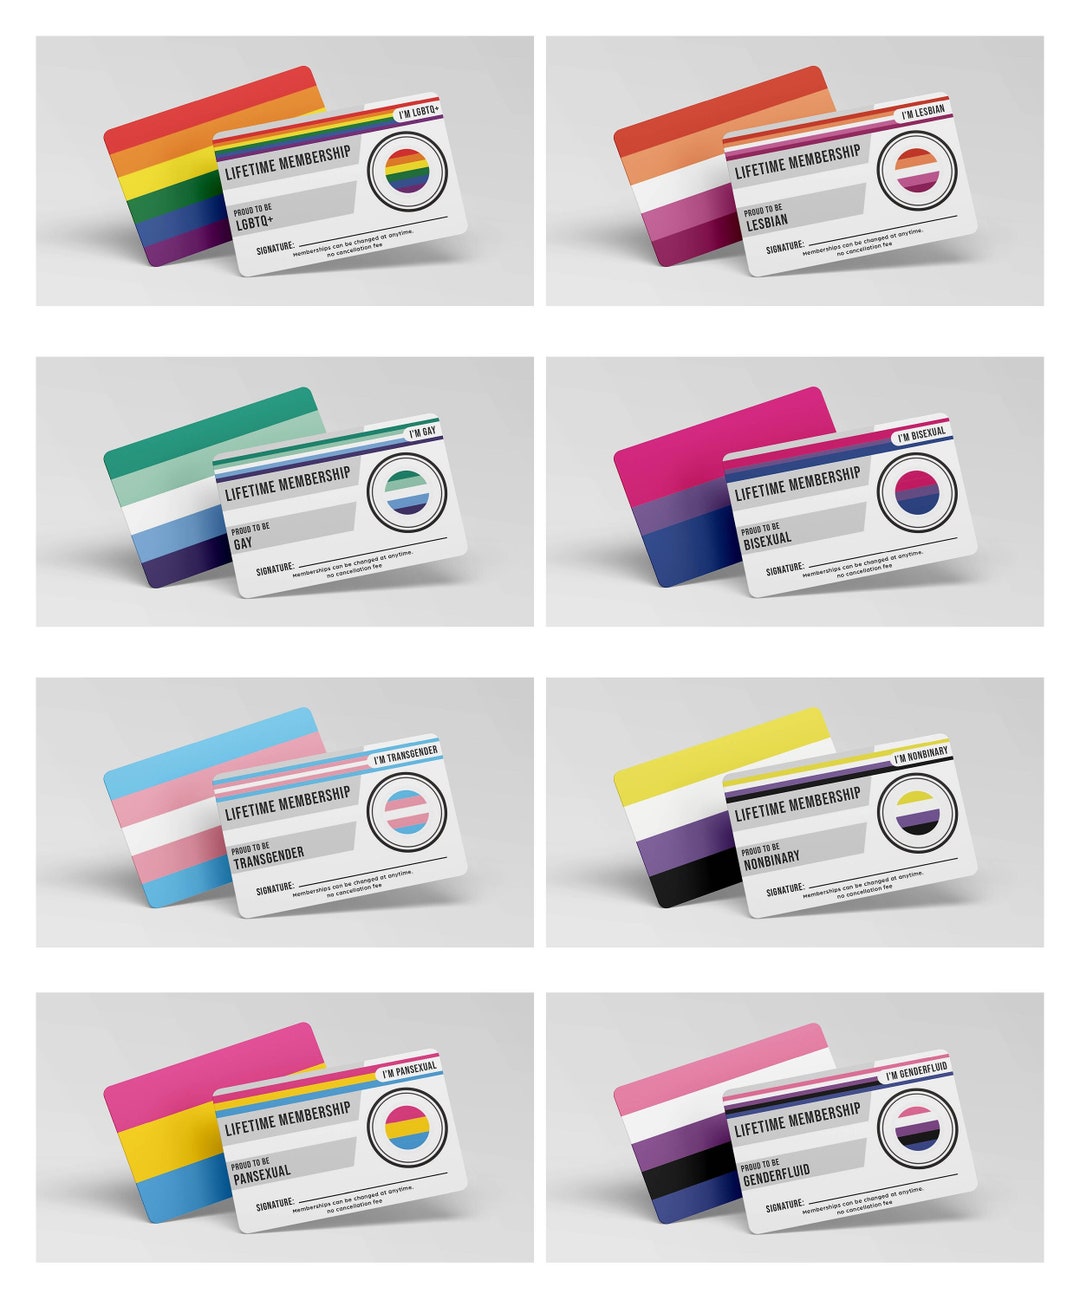 LGBTQ Membership Card Lgbt Proud to Be - Etsy